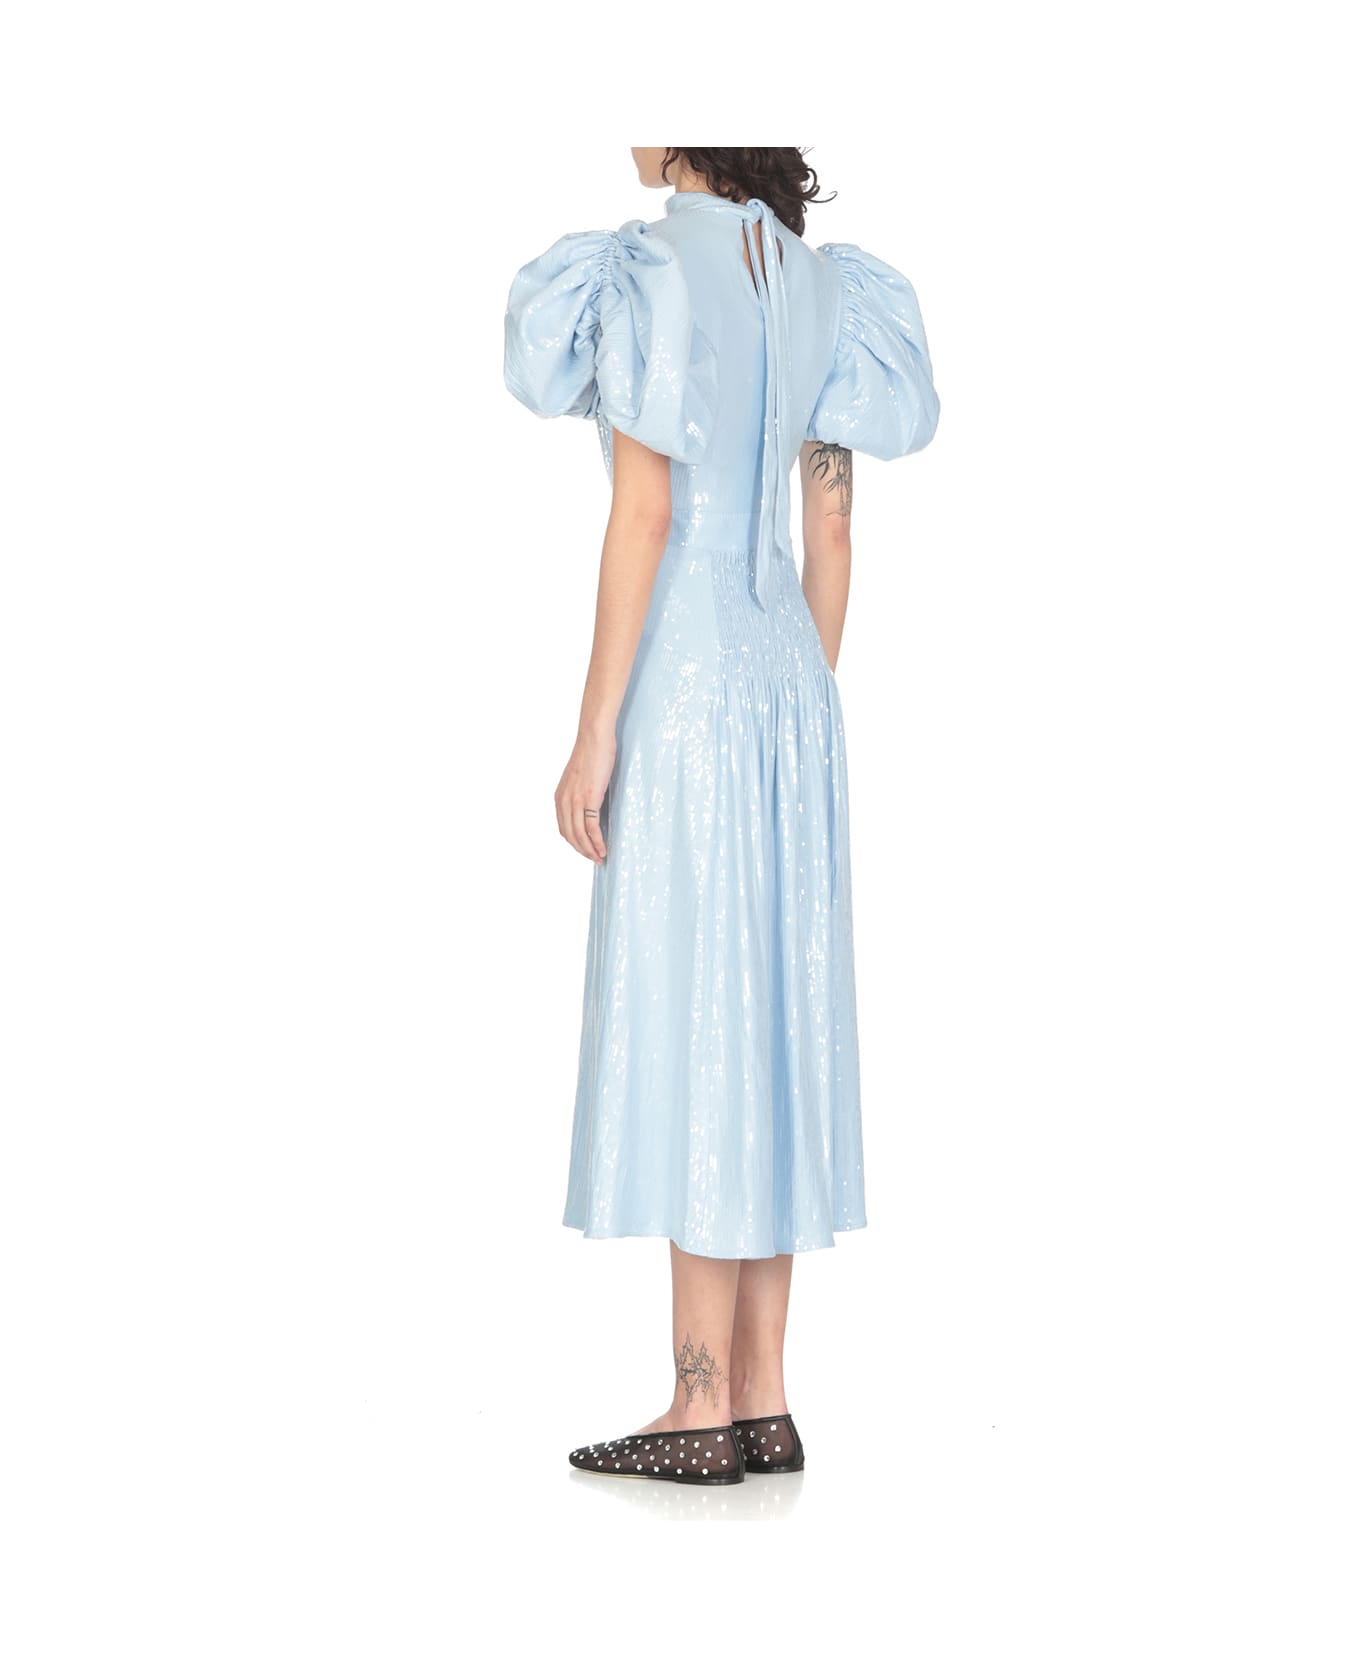 Rotate by Birger Christensen Rhinestones Dress - Light Blue